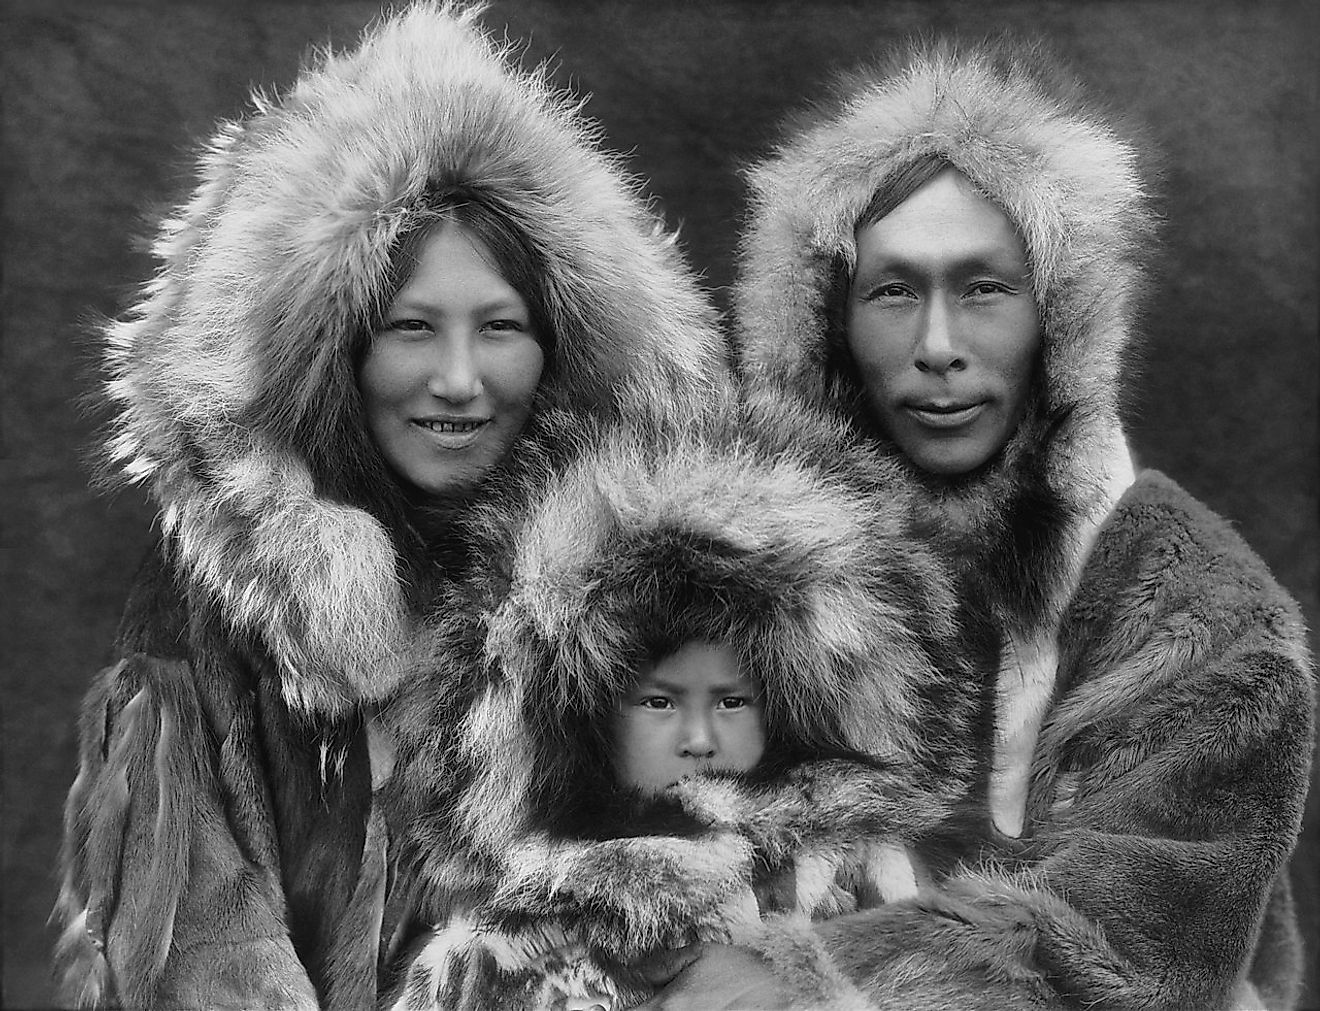 An Inupiat family from Noatak, Alaska, 1929. Image credit: Edward S. Curtis/Public domain